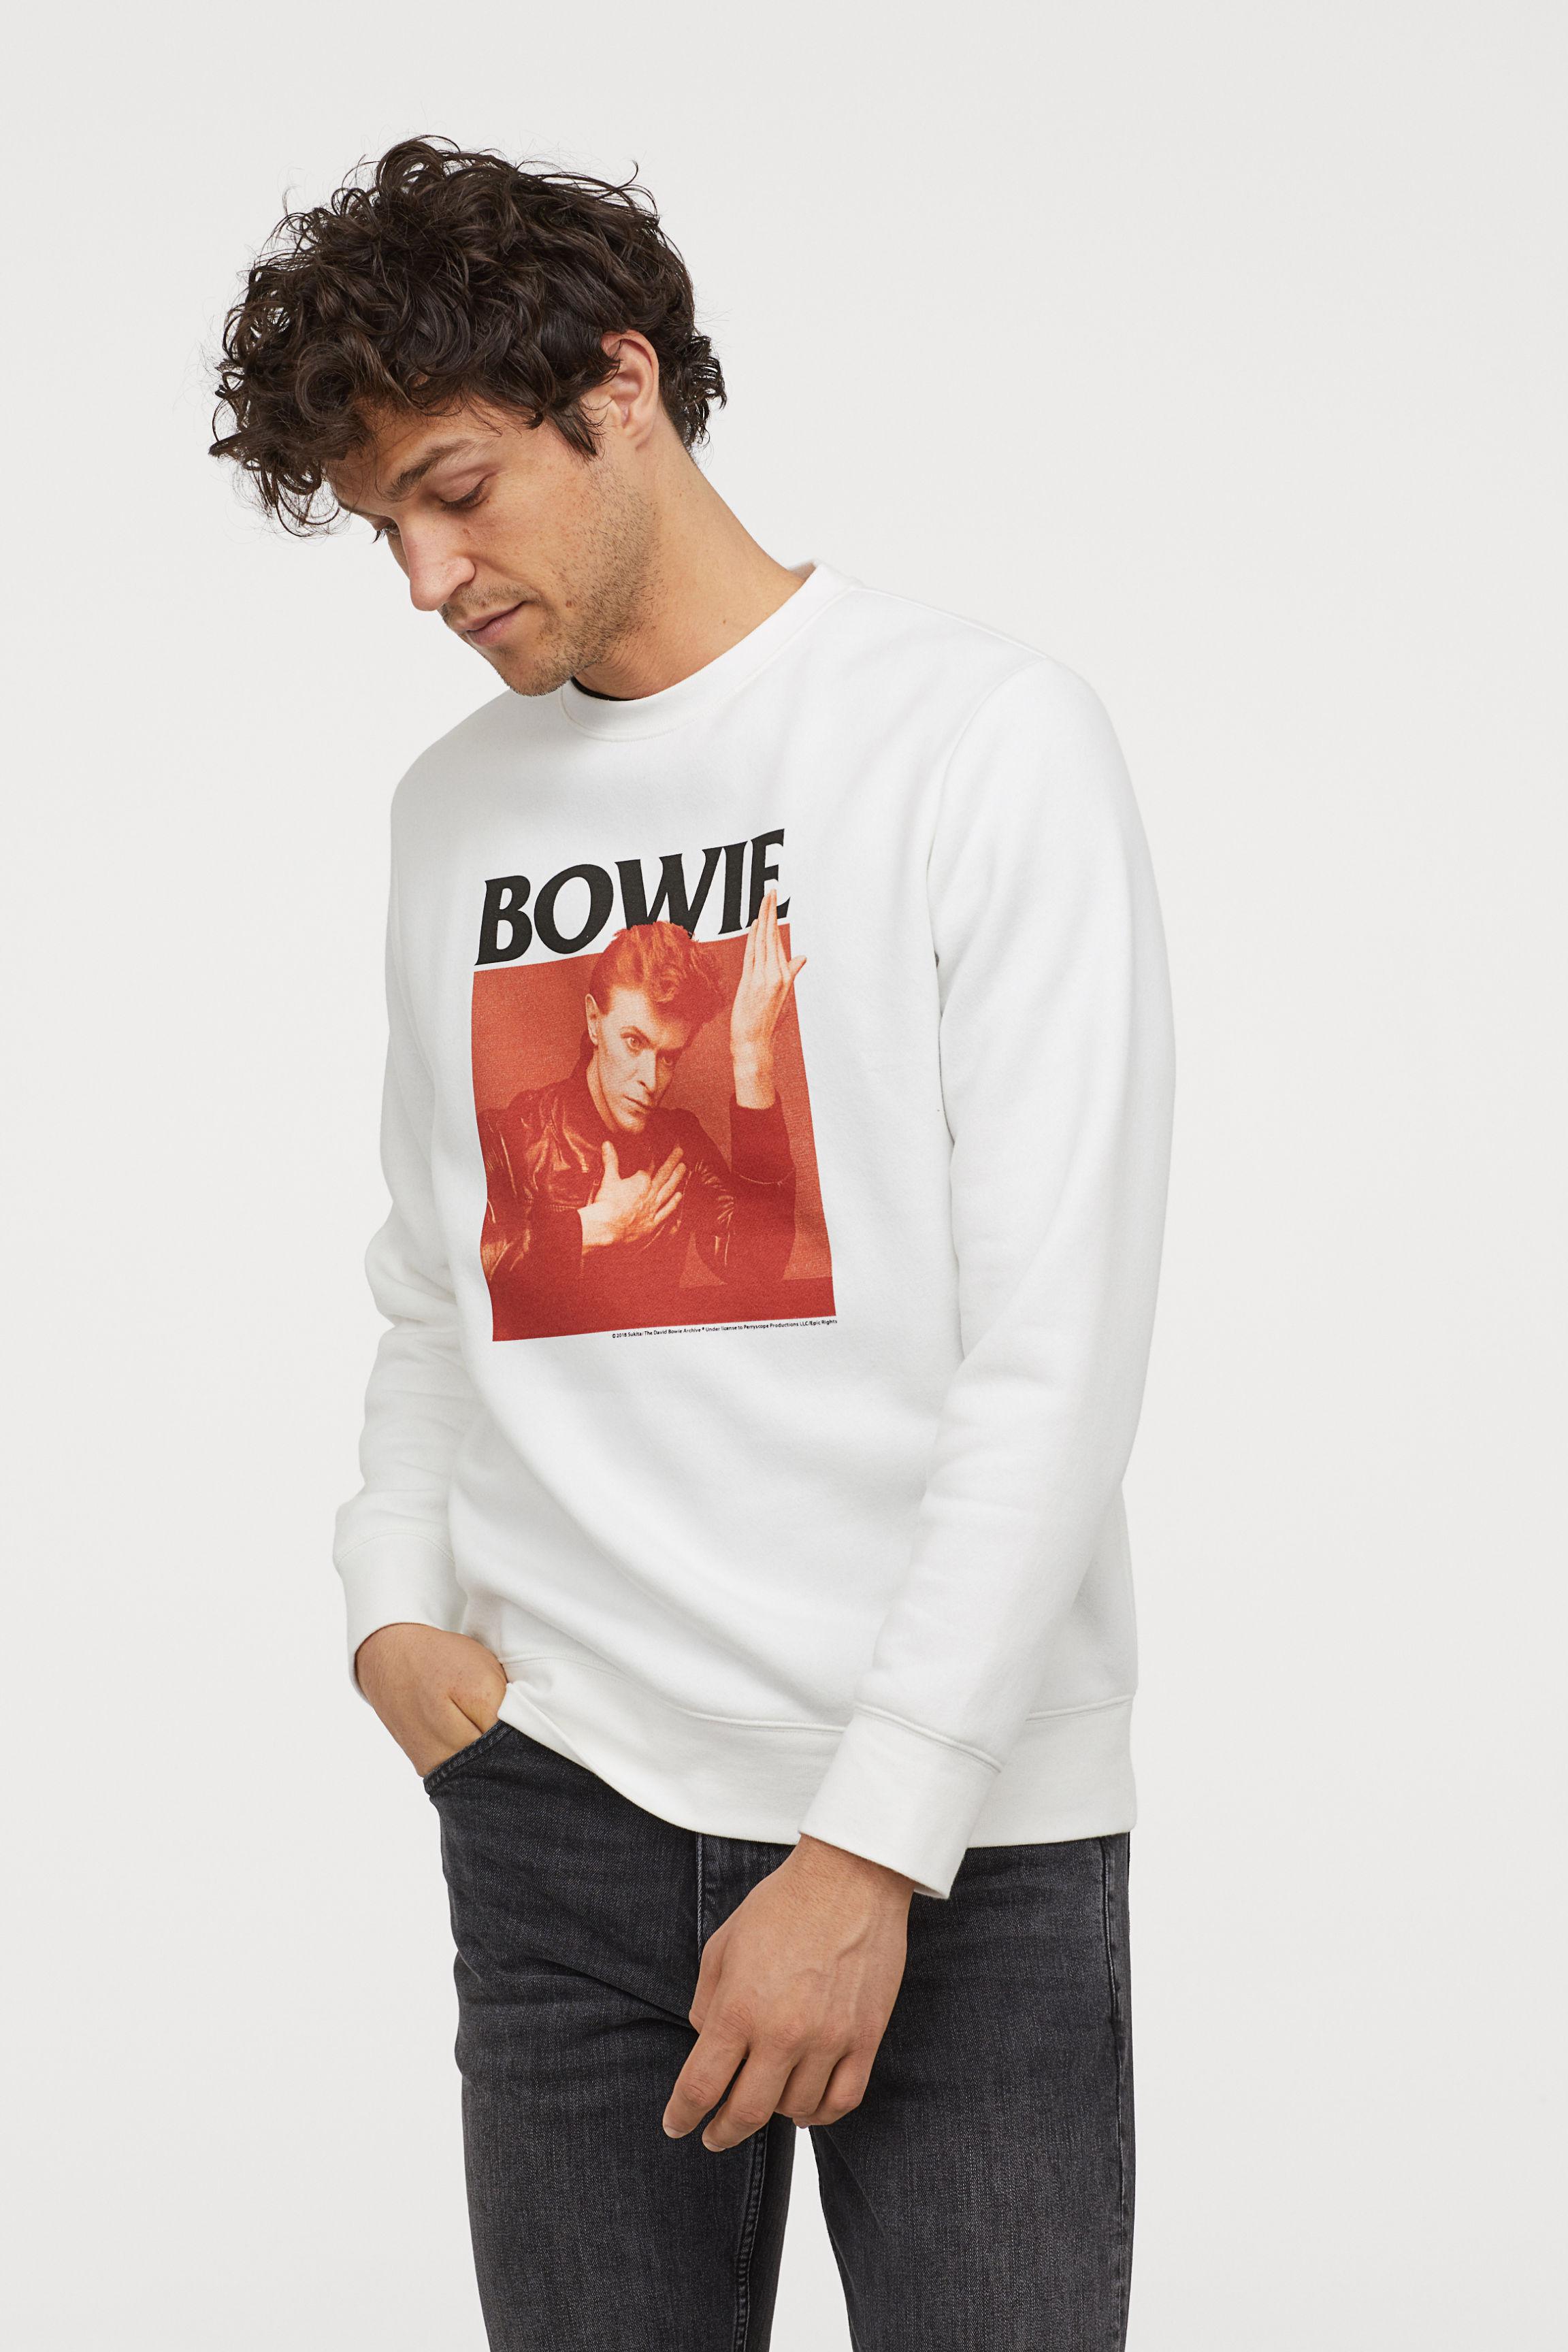 Bowie Sweatshirt H&m Online Sale, UP TO 59% OFF